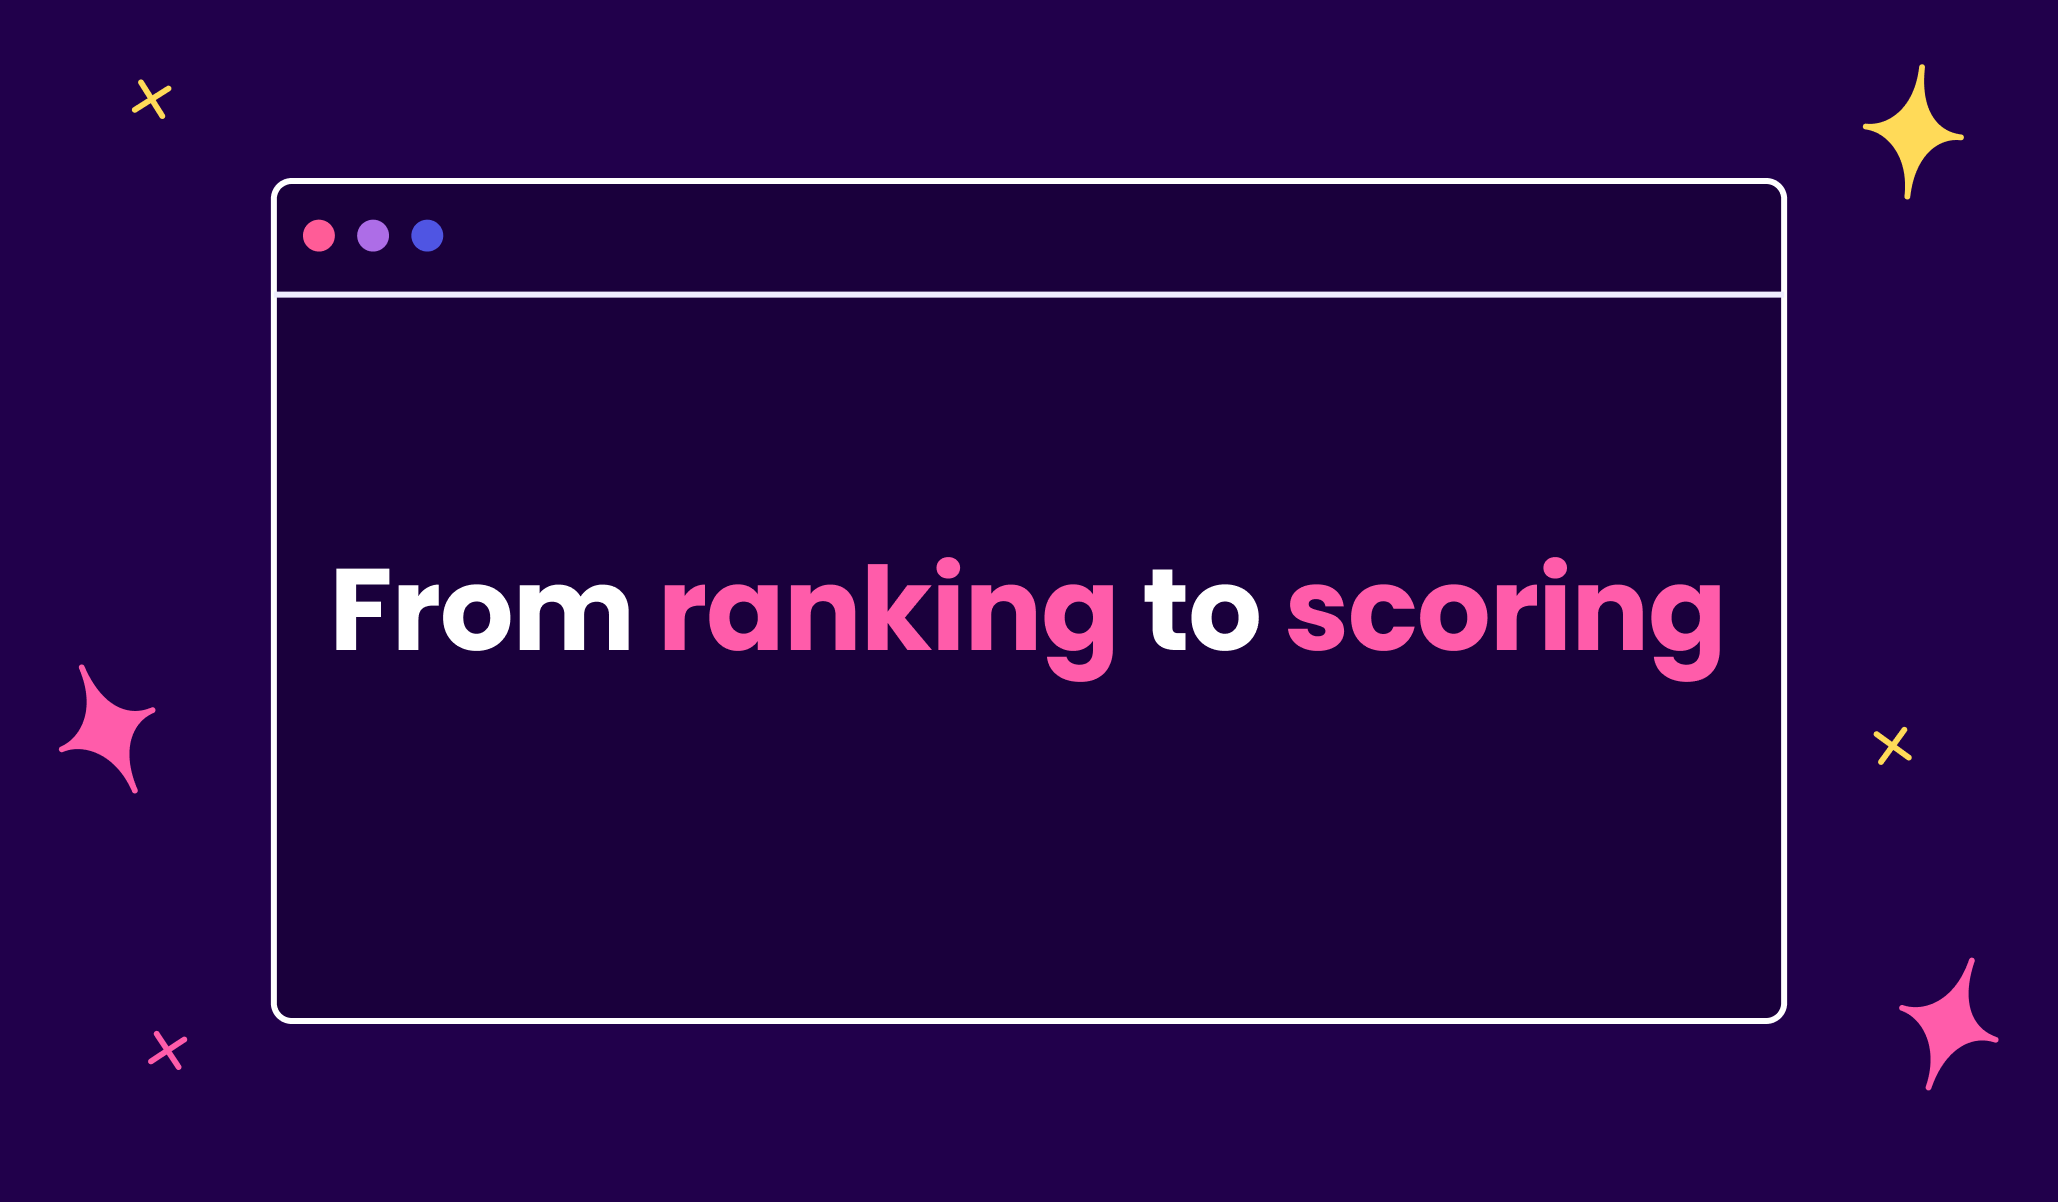 From ranking to scoring